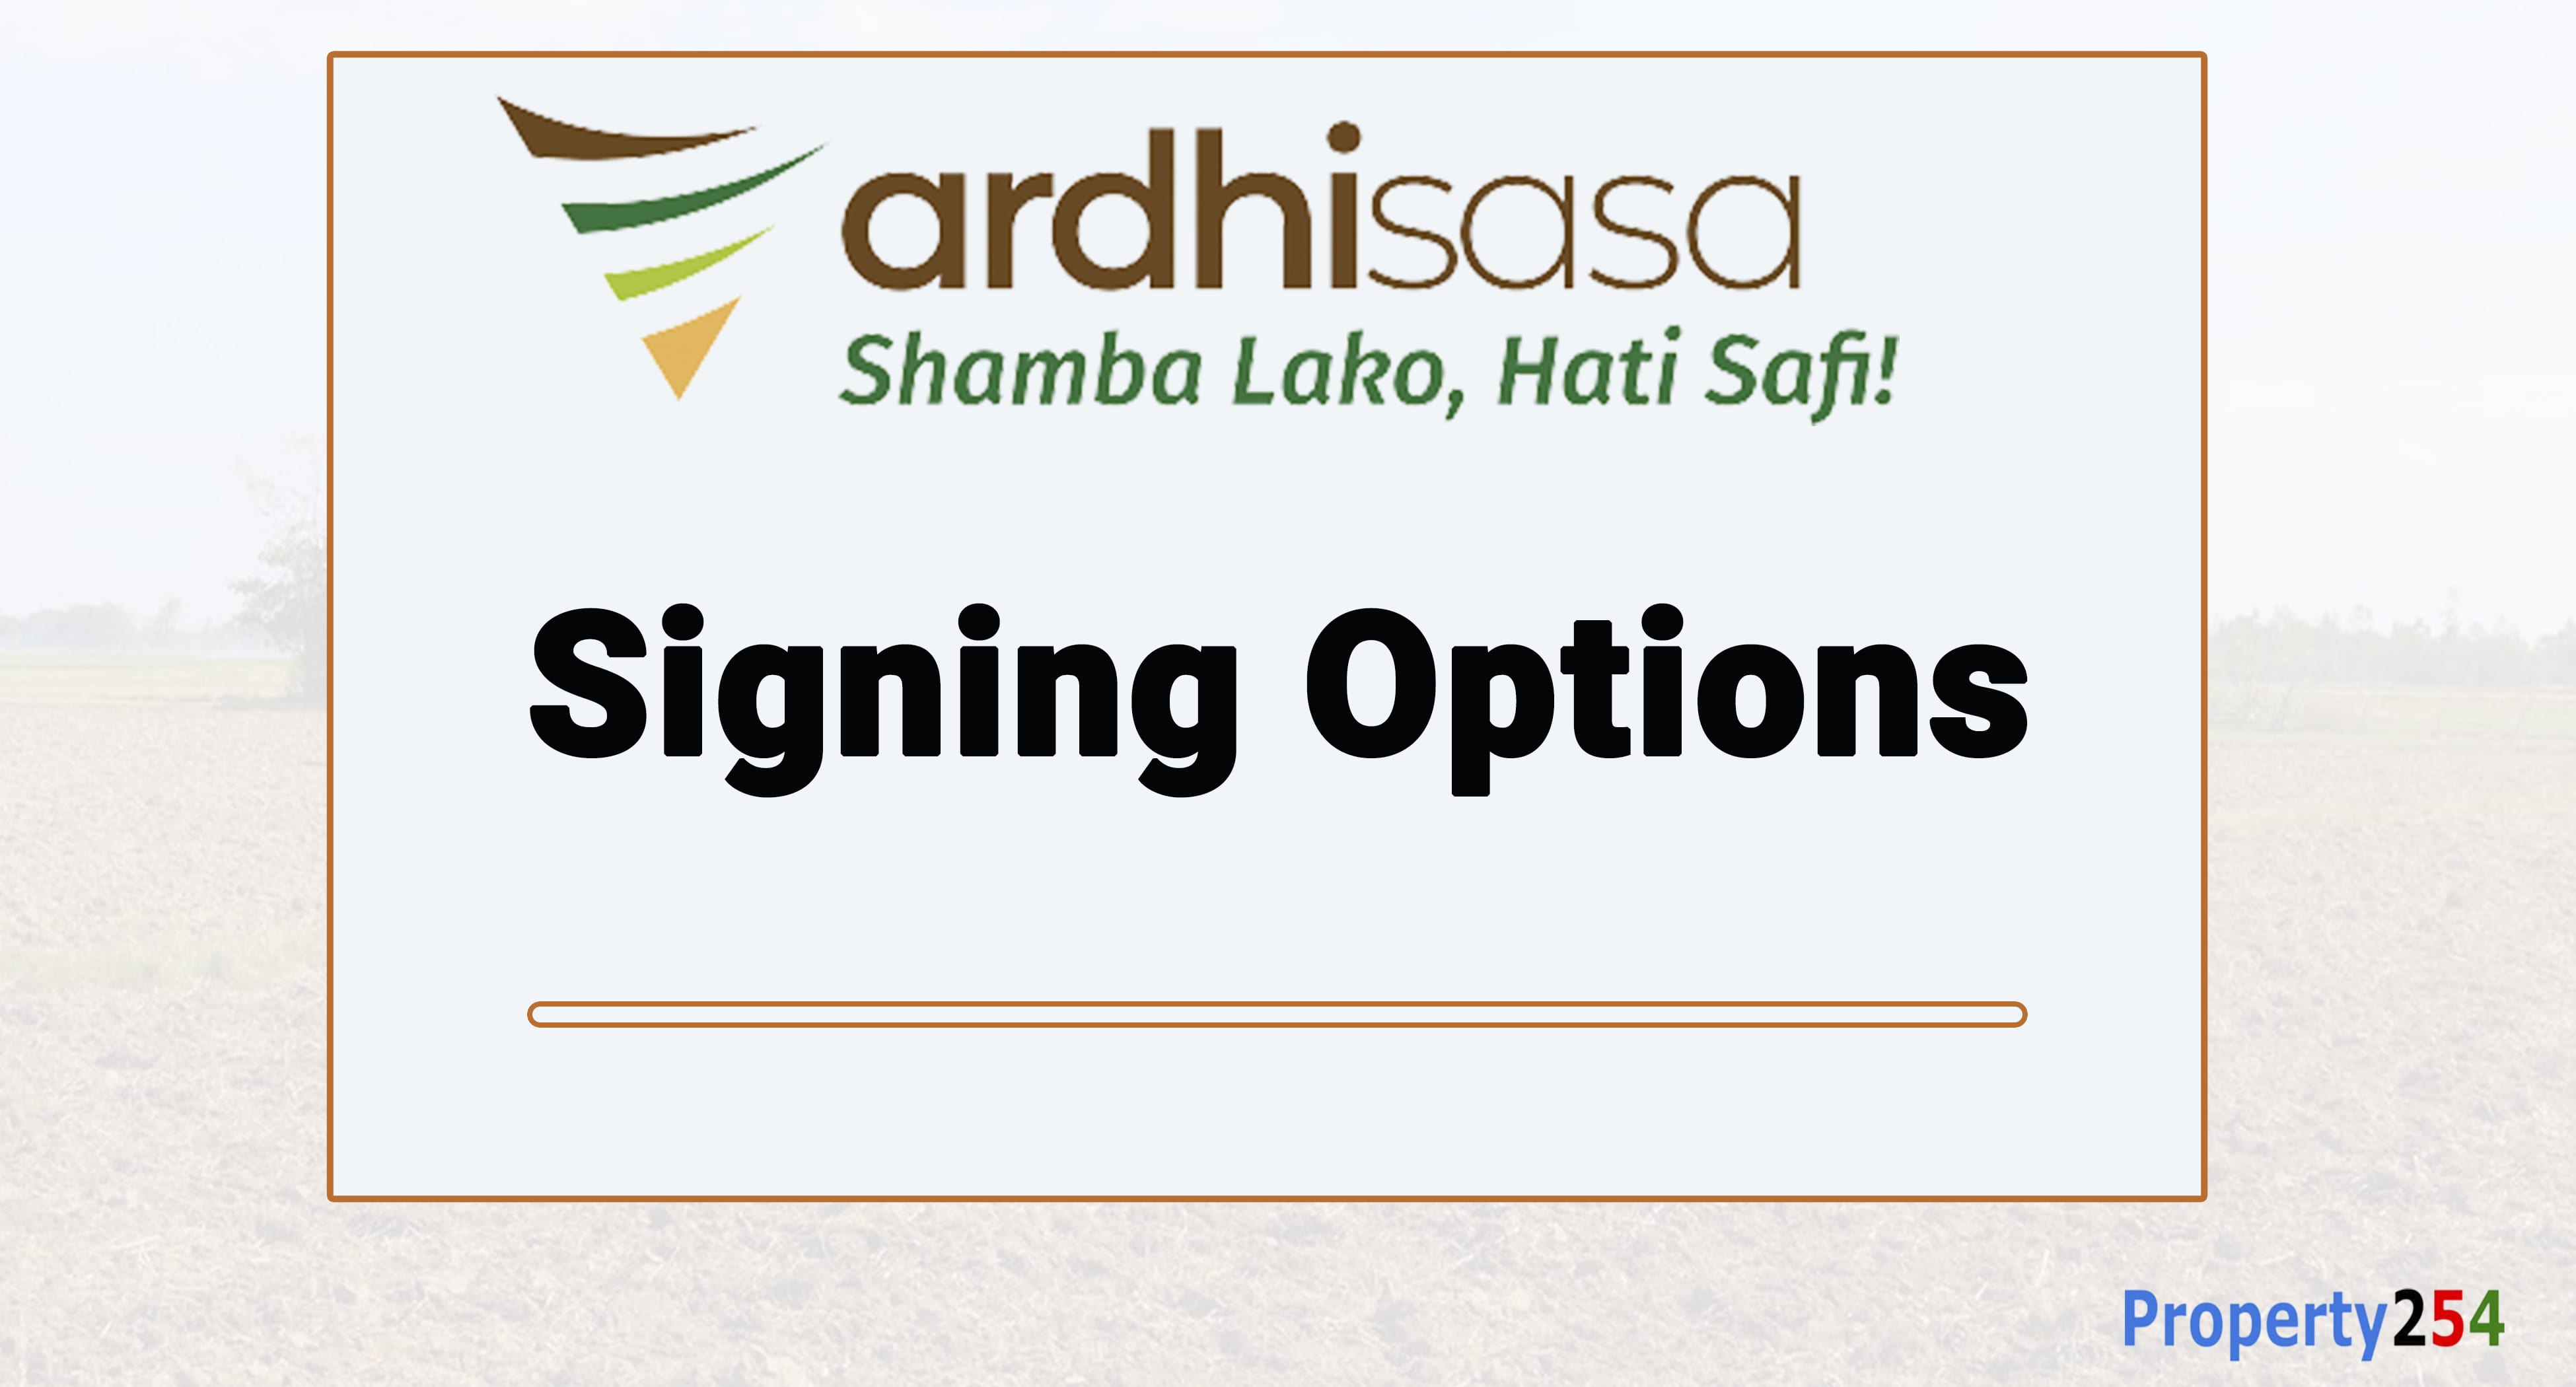 Signing Options on Ardhisasa thumbnail